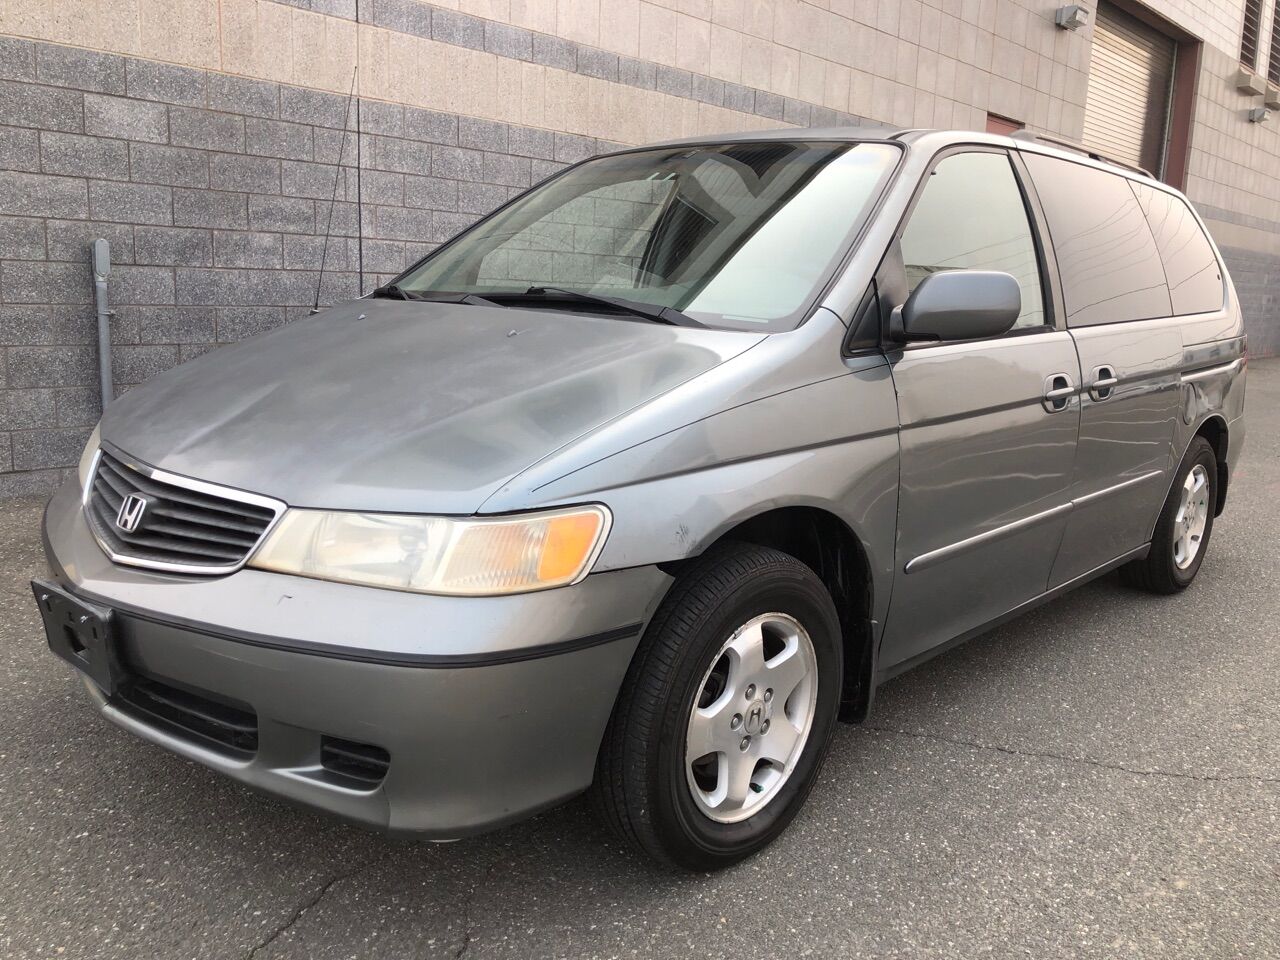 2001 Honda Odyssey For Sale - Carsforsale.com®